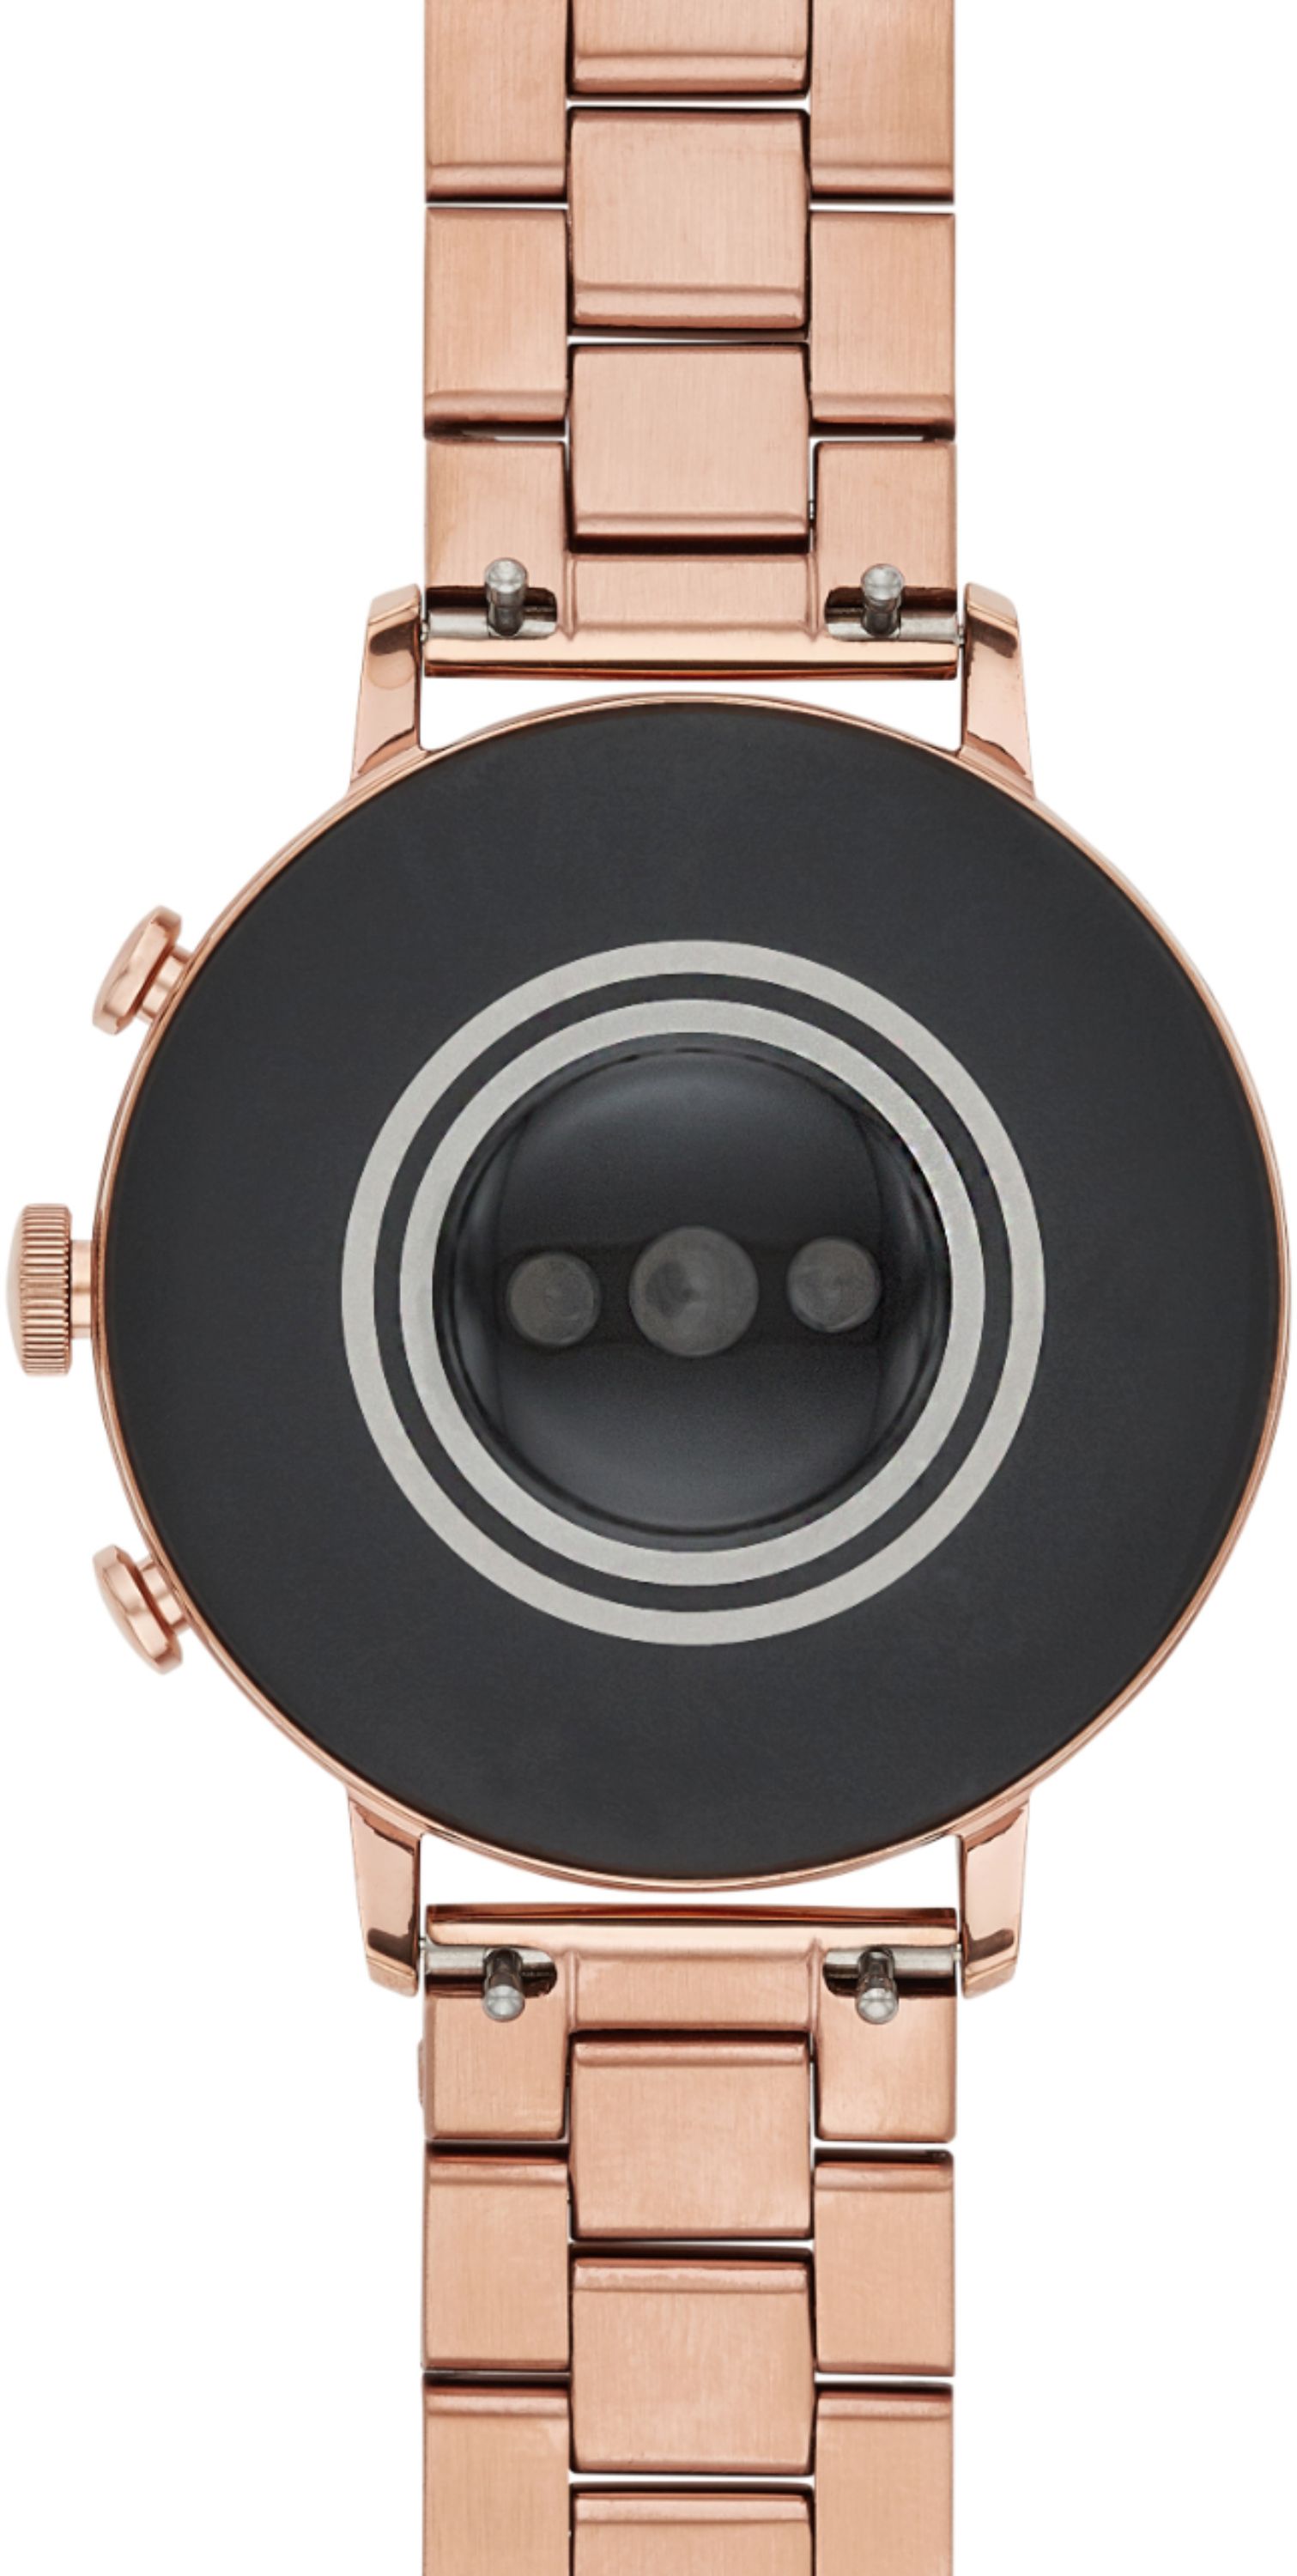 Nuclear sobresalir Pastor Best Buy: Fossil Gen 4 Venture HR Smartwatch 40mm Stainless Steel Rose Gold  FTW6011